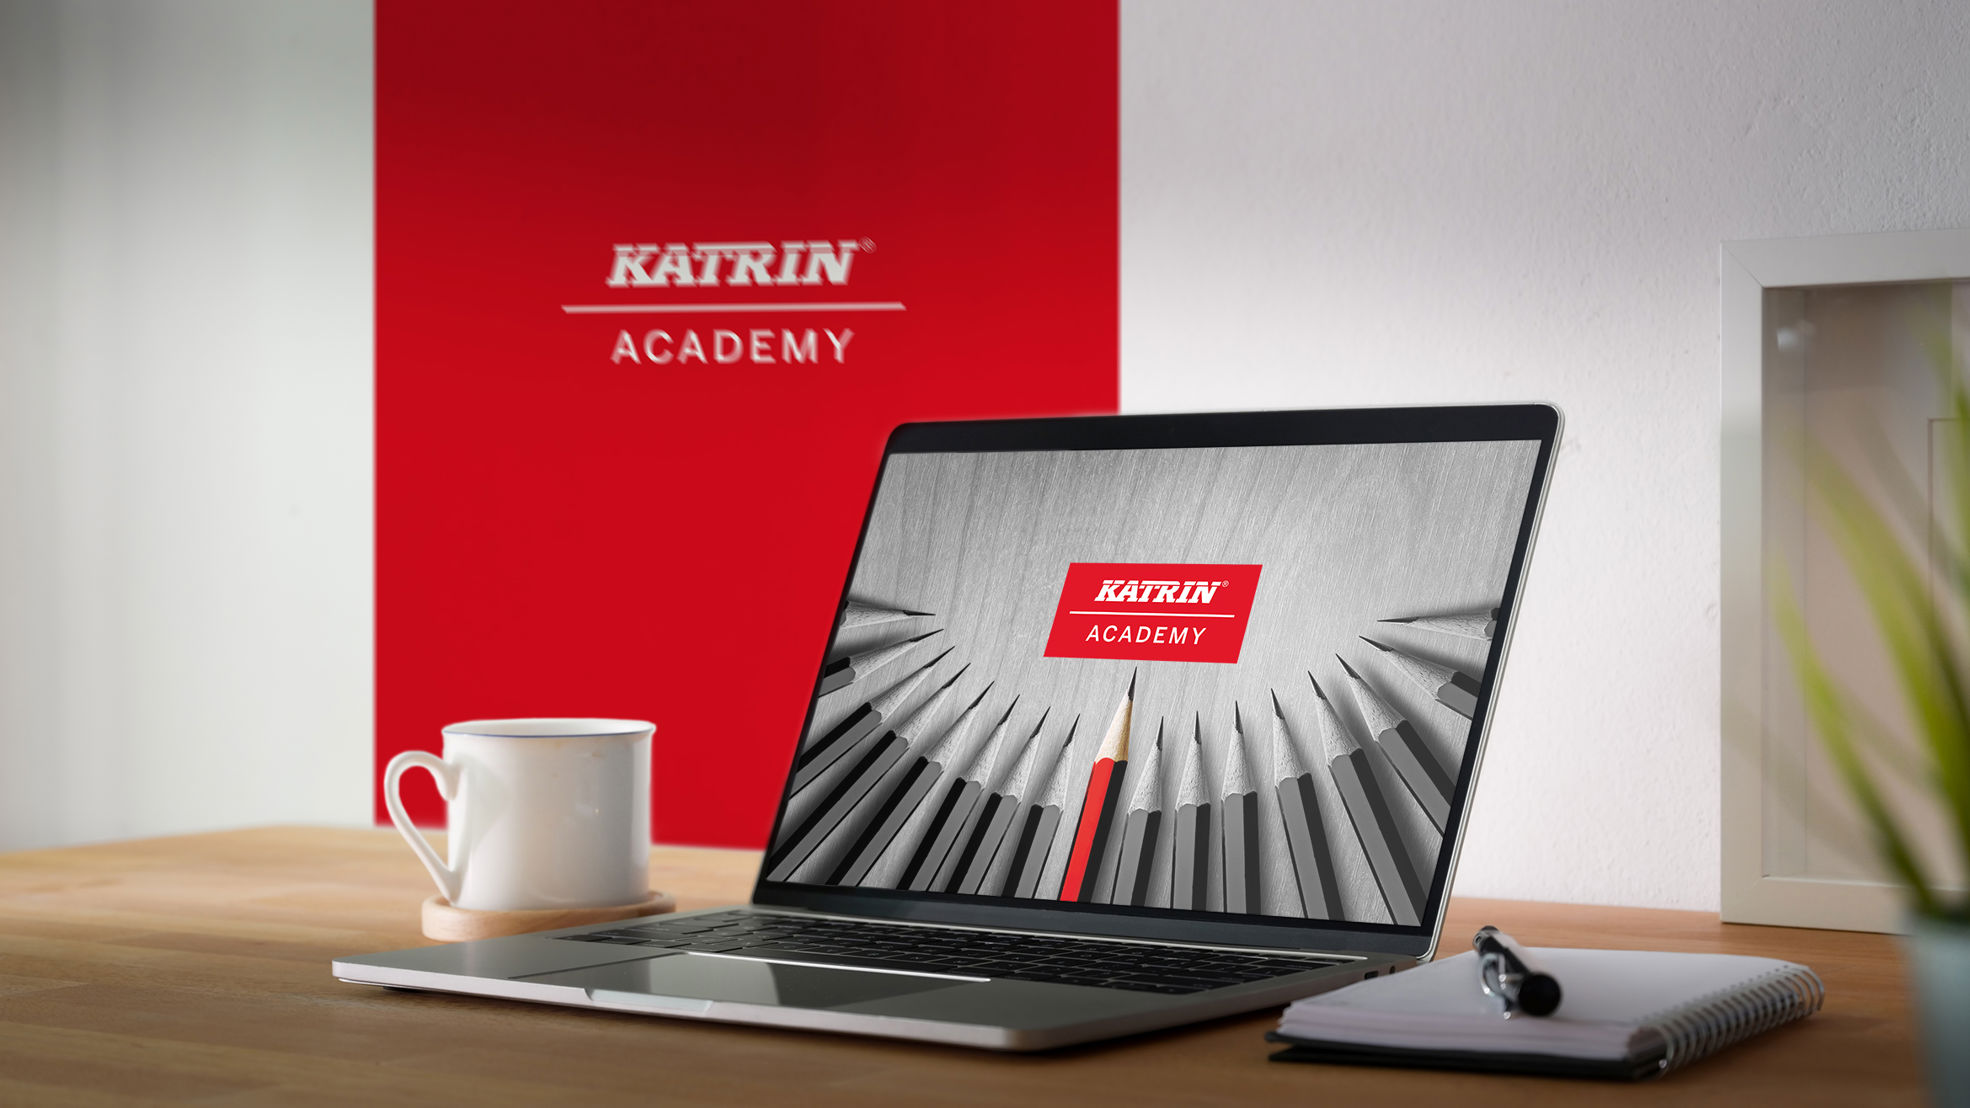 Katrin Academy is an immersive training program for Katrin partners